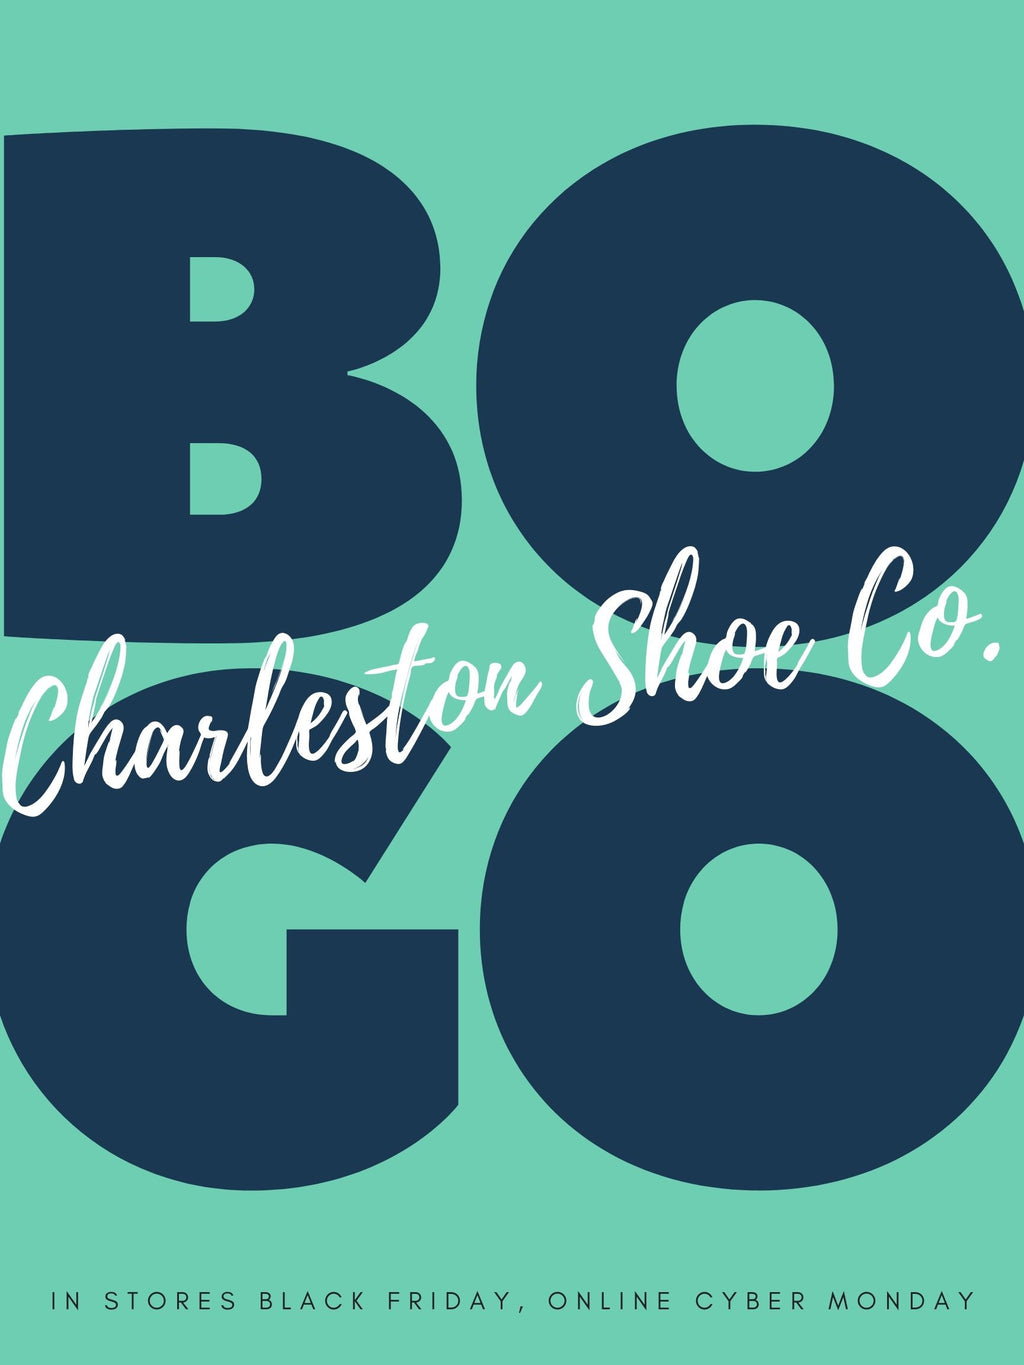 Charleston Shoe Company Blog